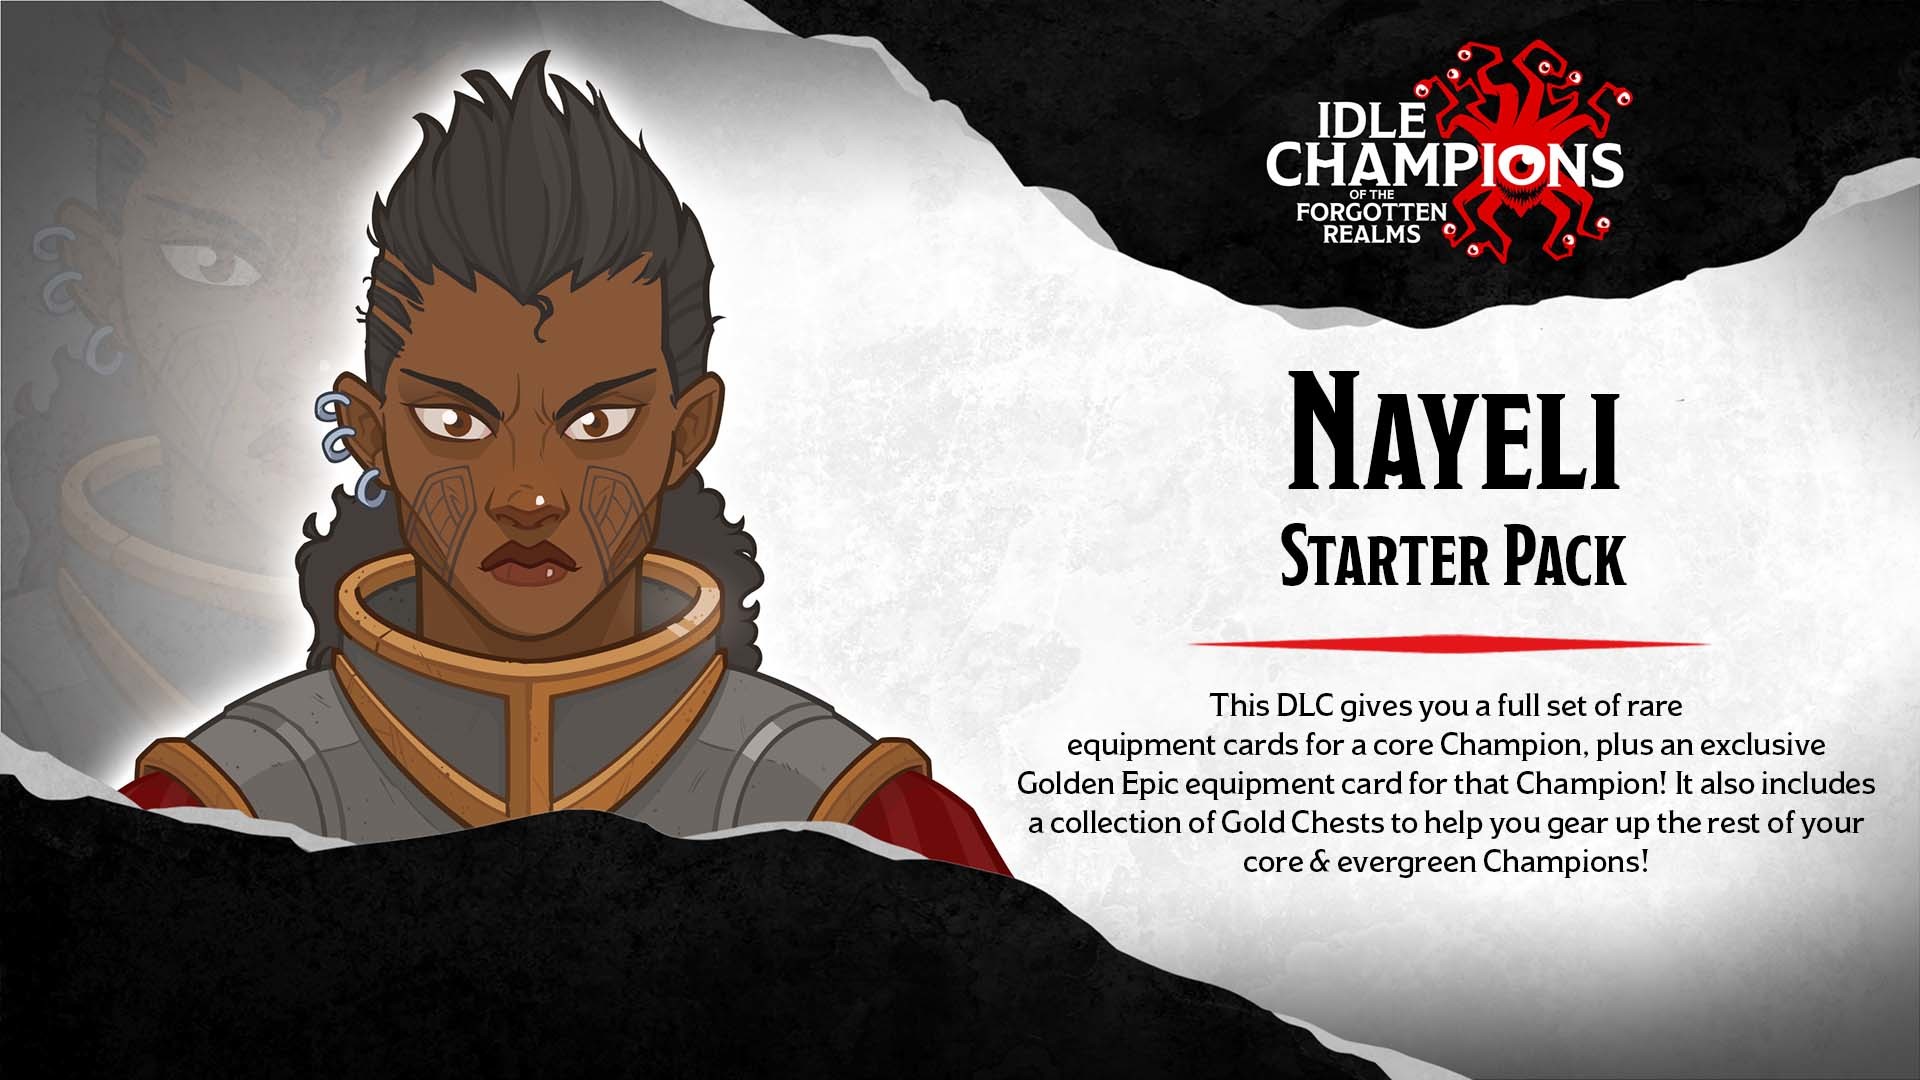 Idle Champions - Nayeli Starter Pack Featured Screenshot #1